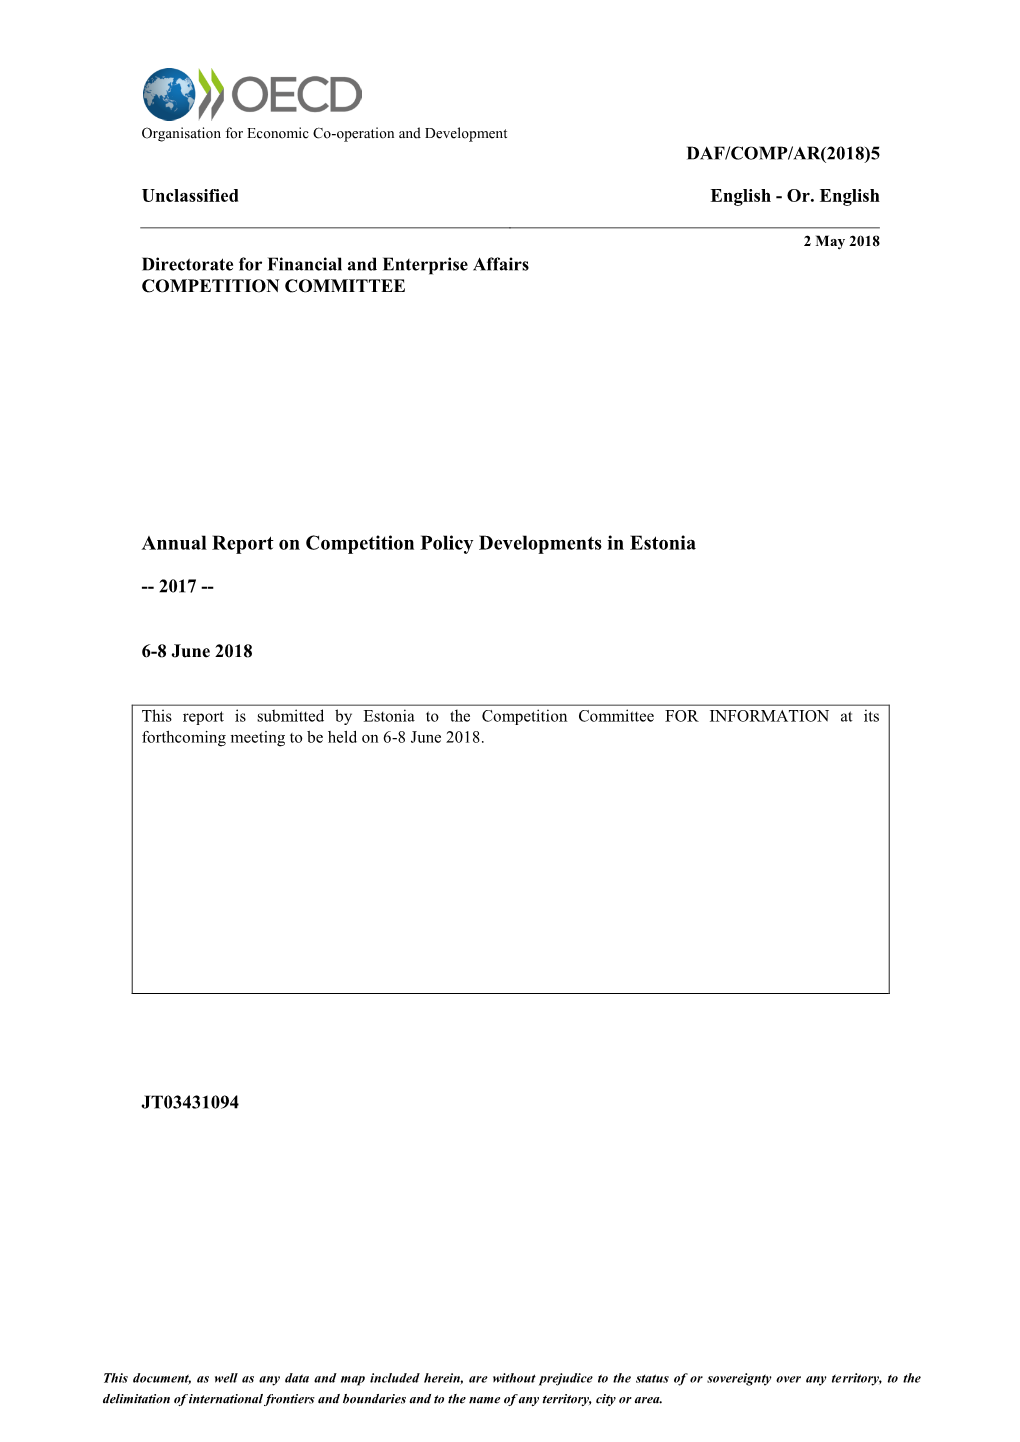 Annual Report on Competition Policy Developments in Estonia